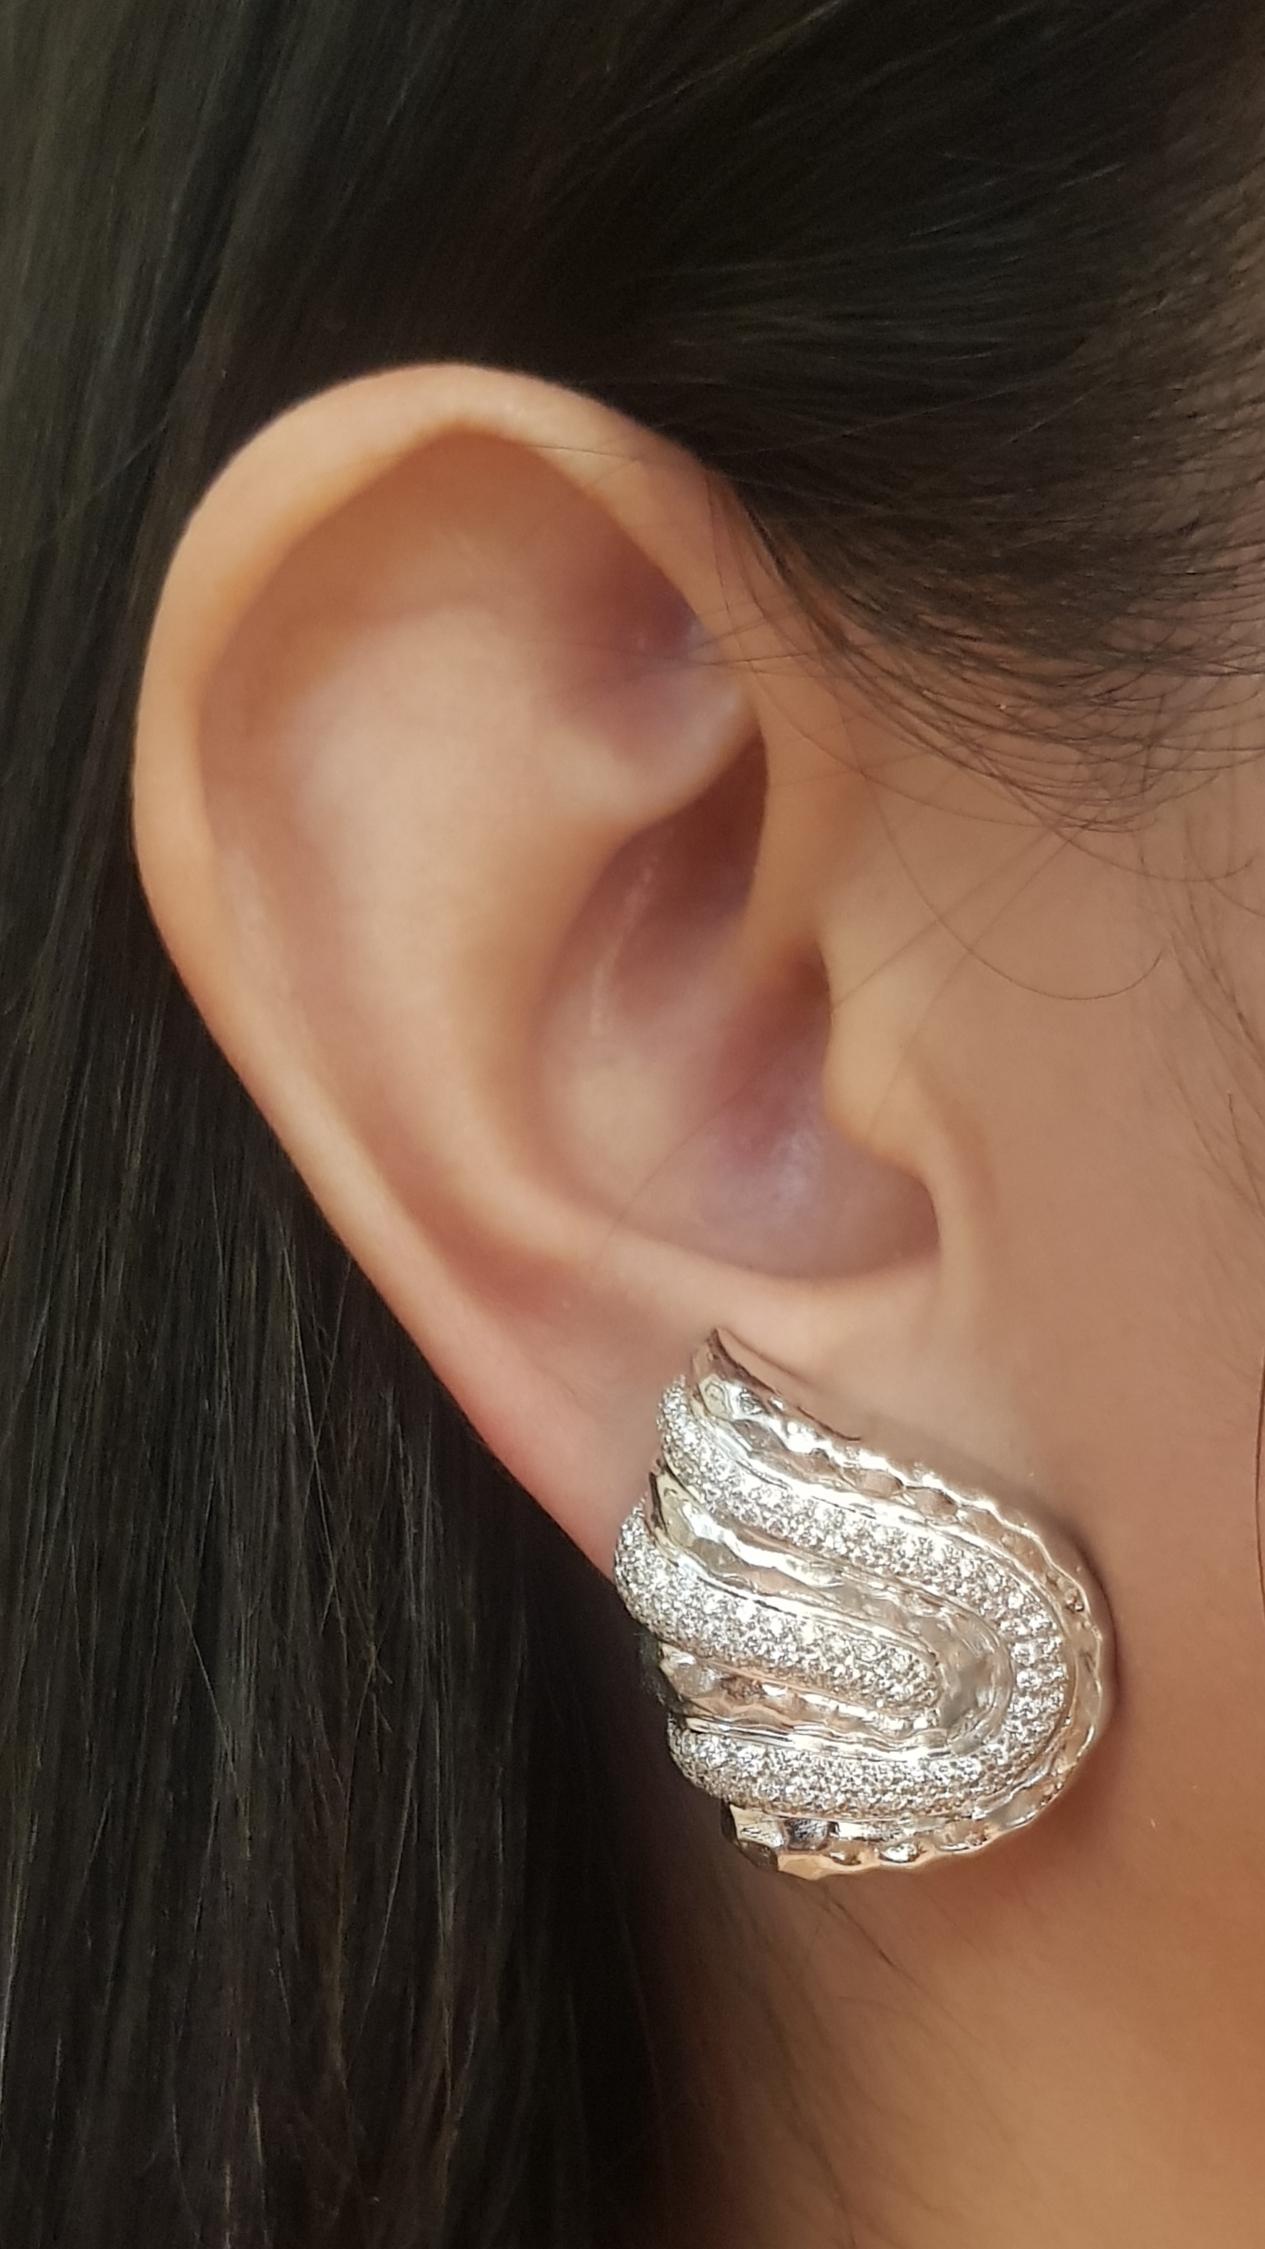 Diamond 1.68 carats Earrings set in 18K White Gold Settings

Width: 2.1 cm 
Length: 2.7 cm
Total Weight: 22.74 grams

